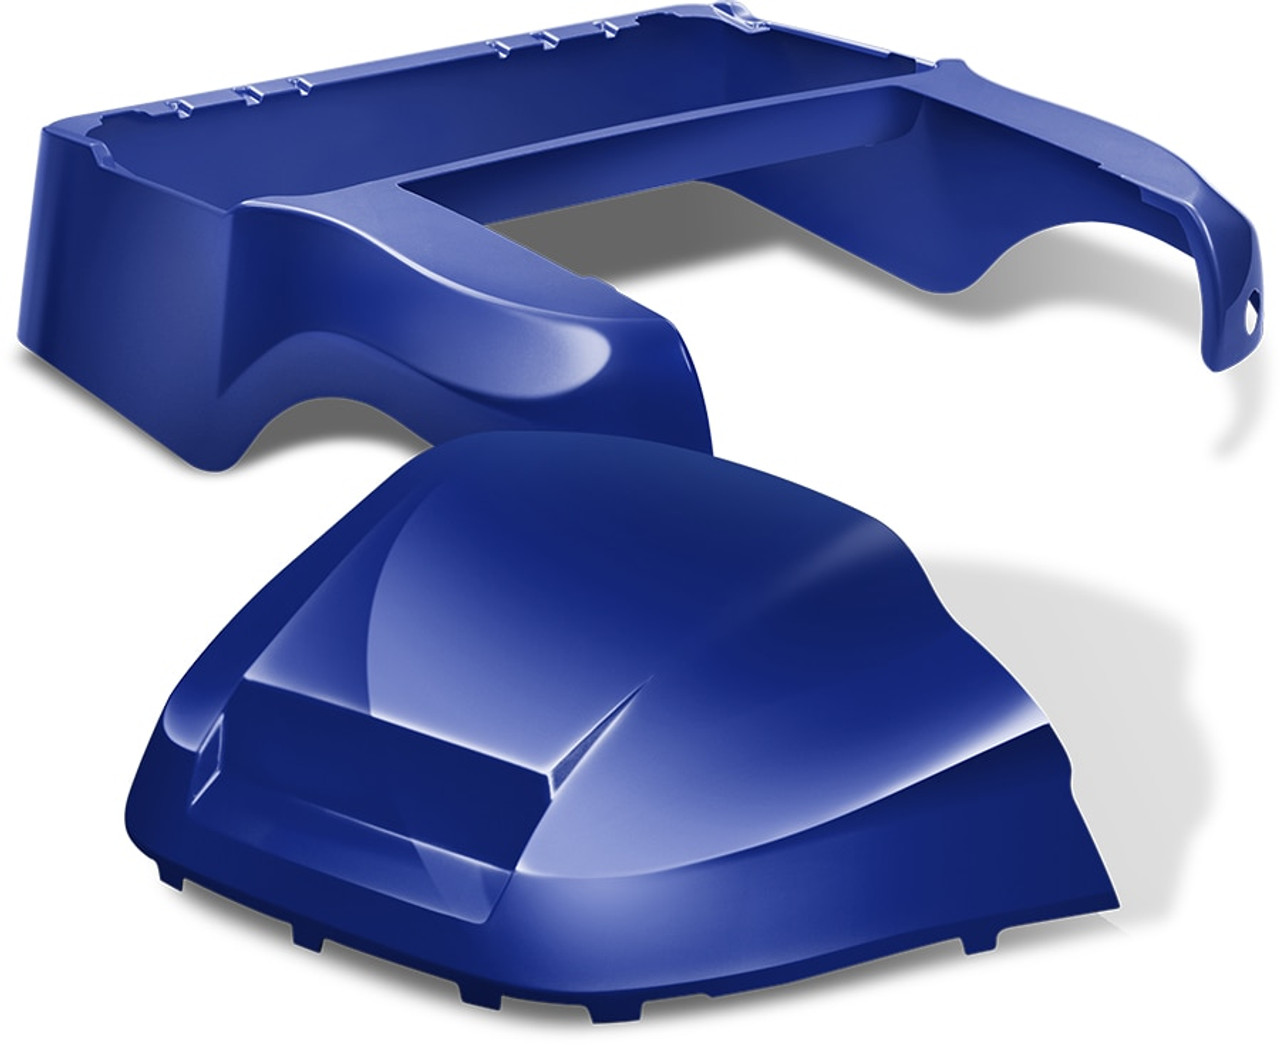 DoubleTake Club Car Precedent Body Kit Factory Style Blue [DT-PREFACT-BLU]